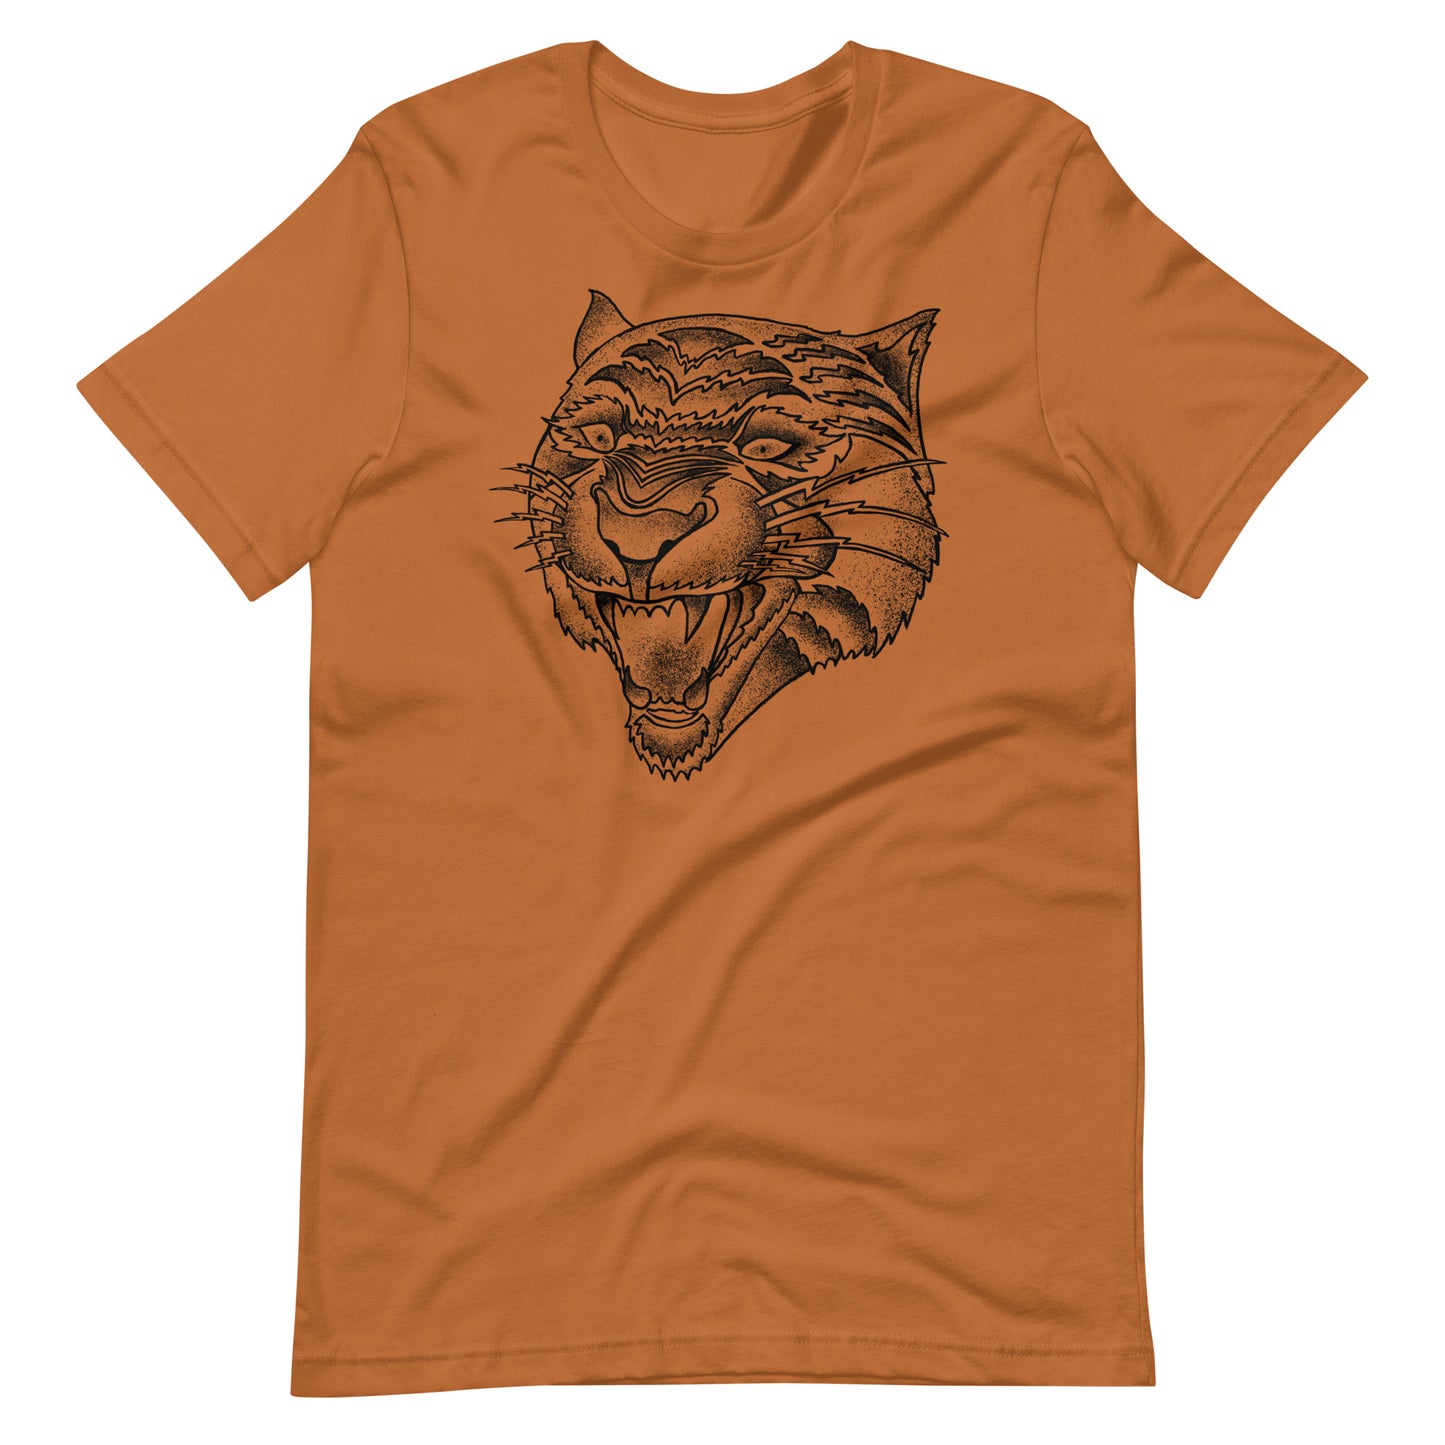 Panther Black - Men's t-shirt - Toast Front